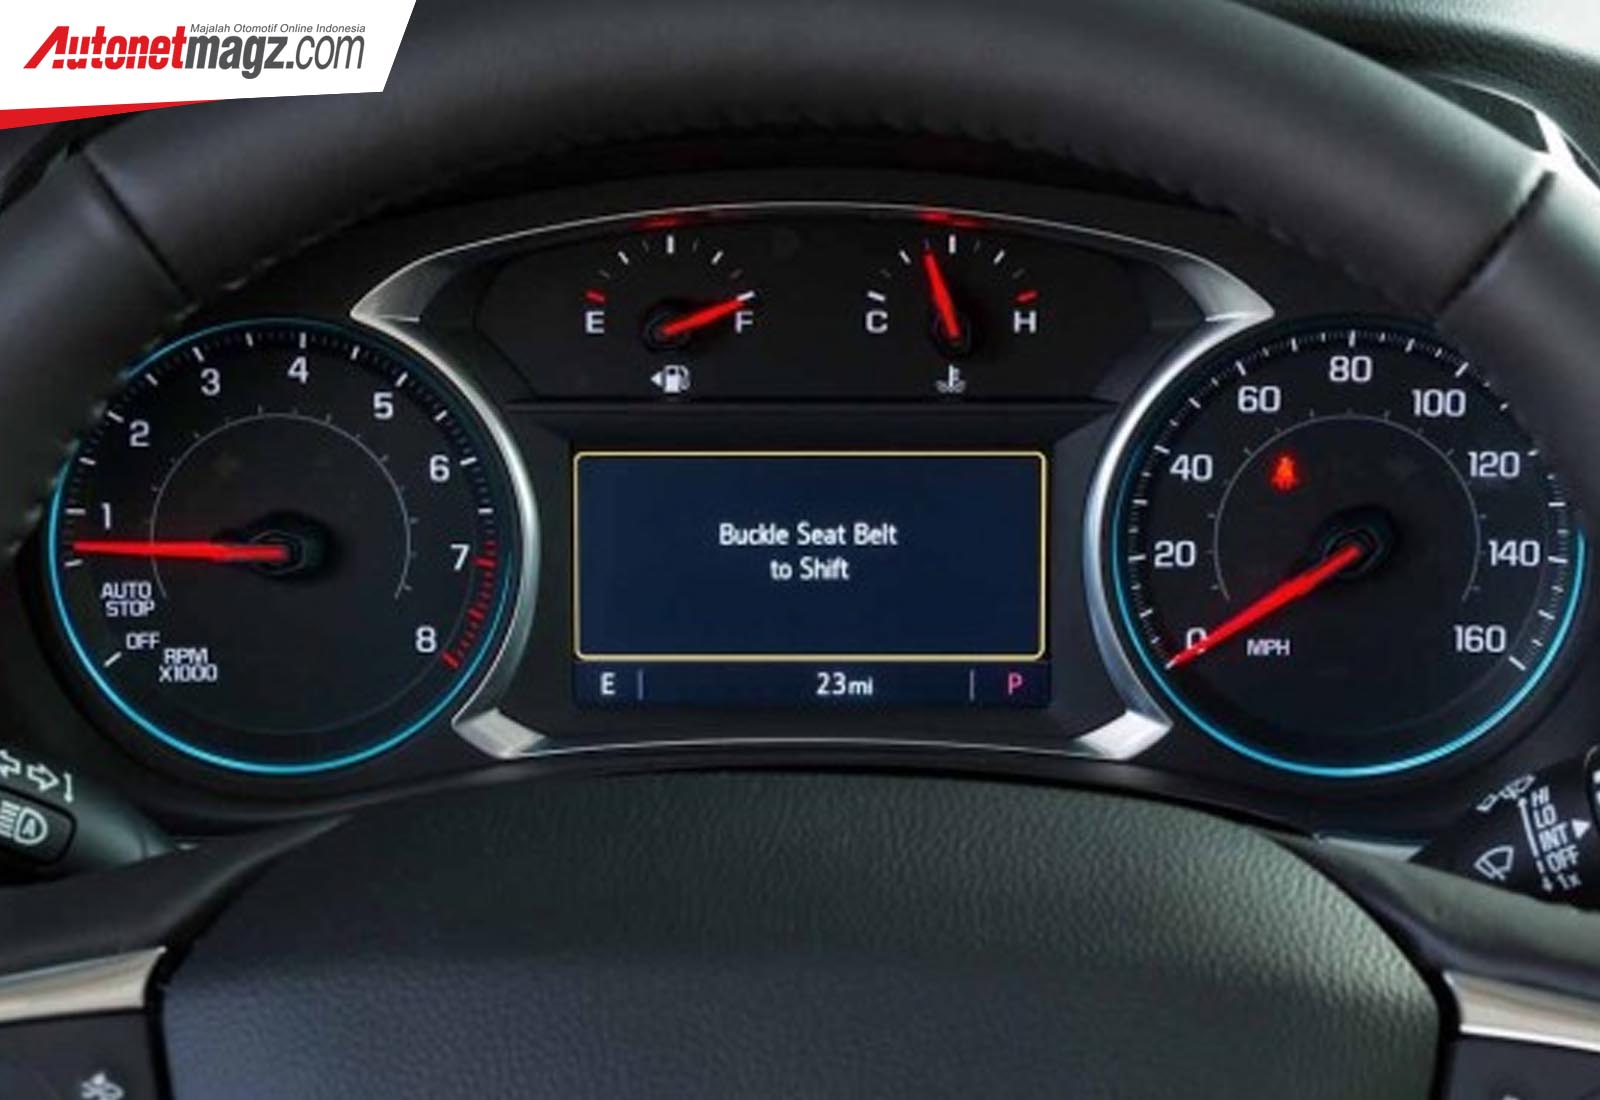 Berita, Chevrolet Buckle up to drive: Tak Gunakan Seatbelt, Mobil Chevrolet Ogah Jalan